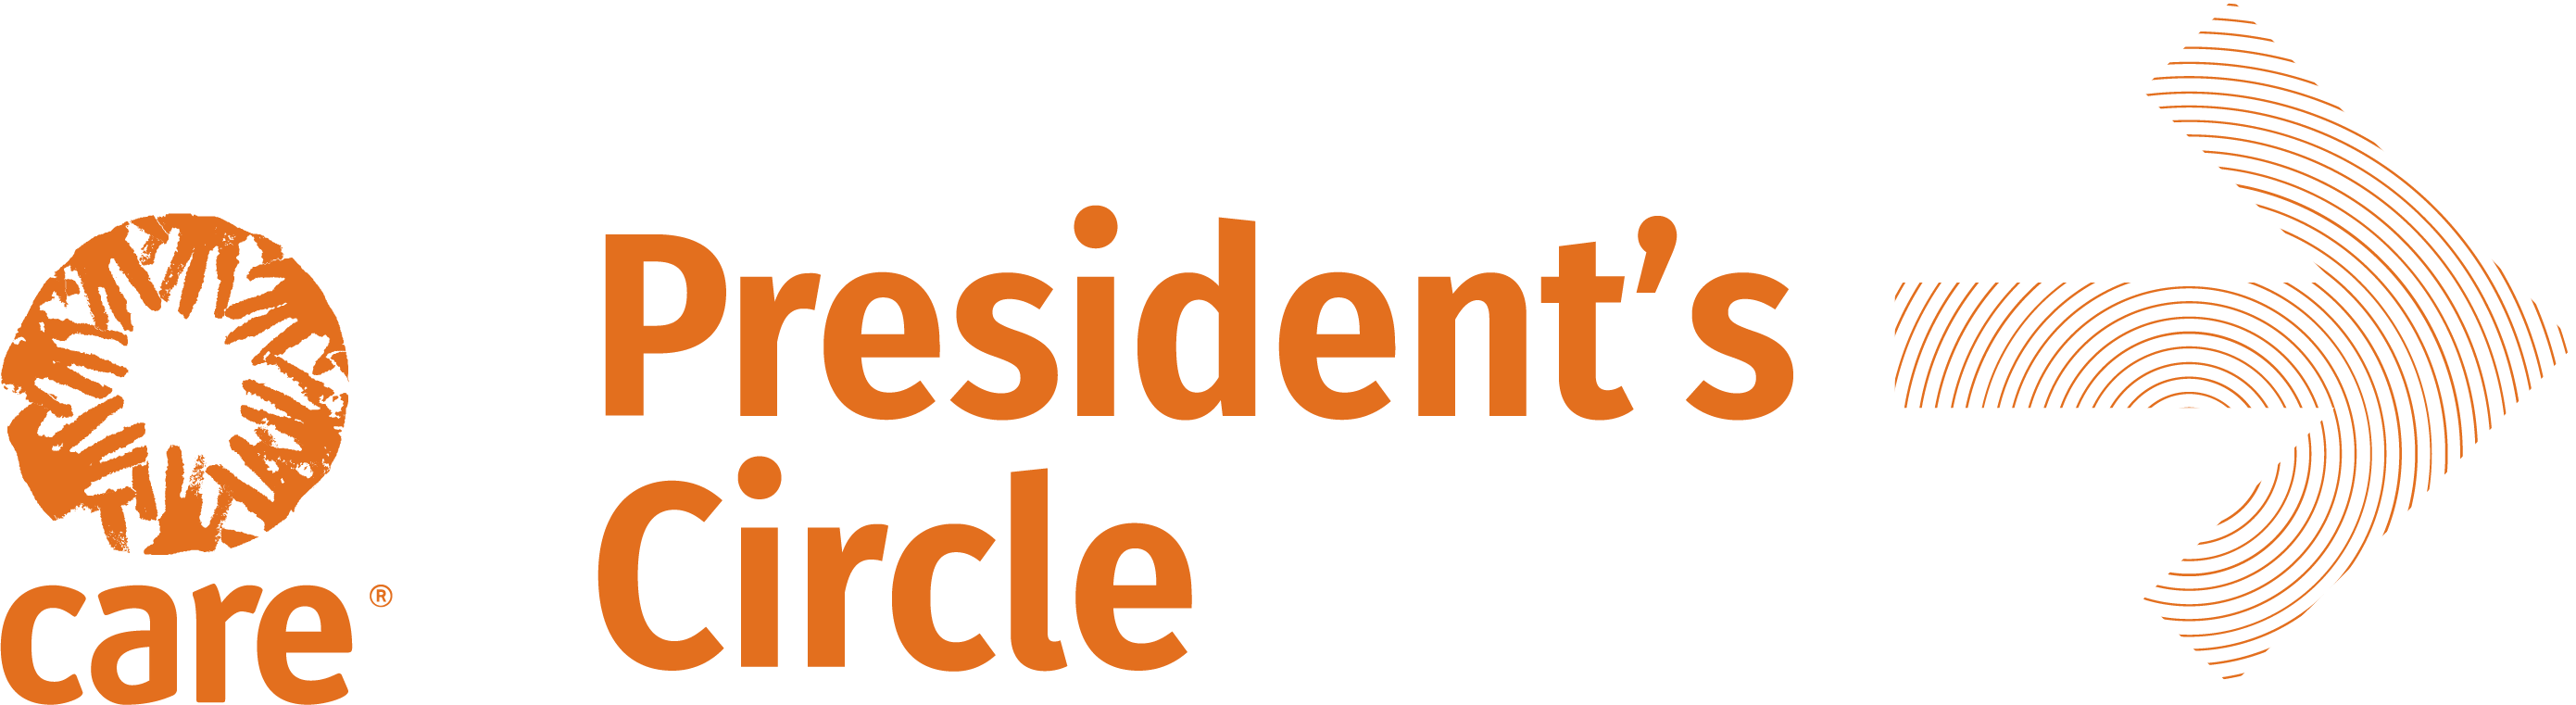 CARE President's Circle logo